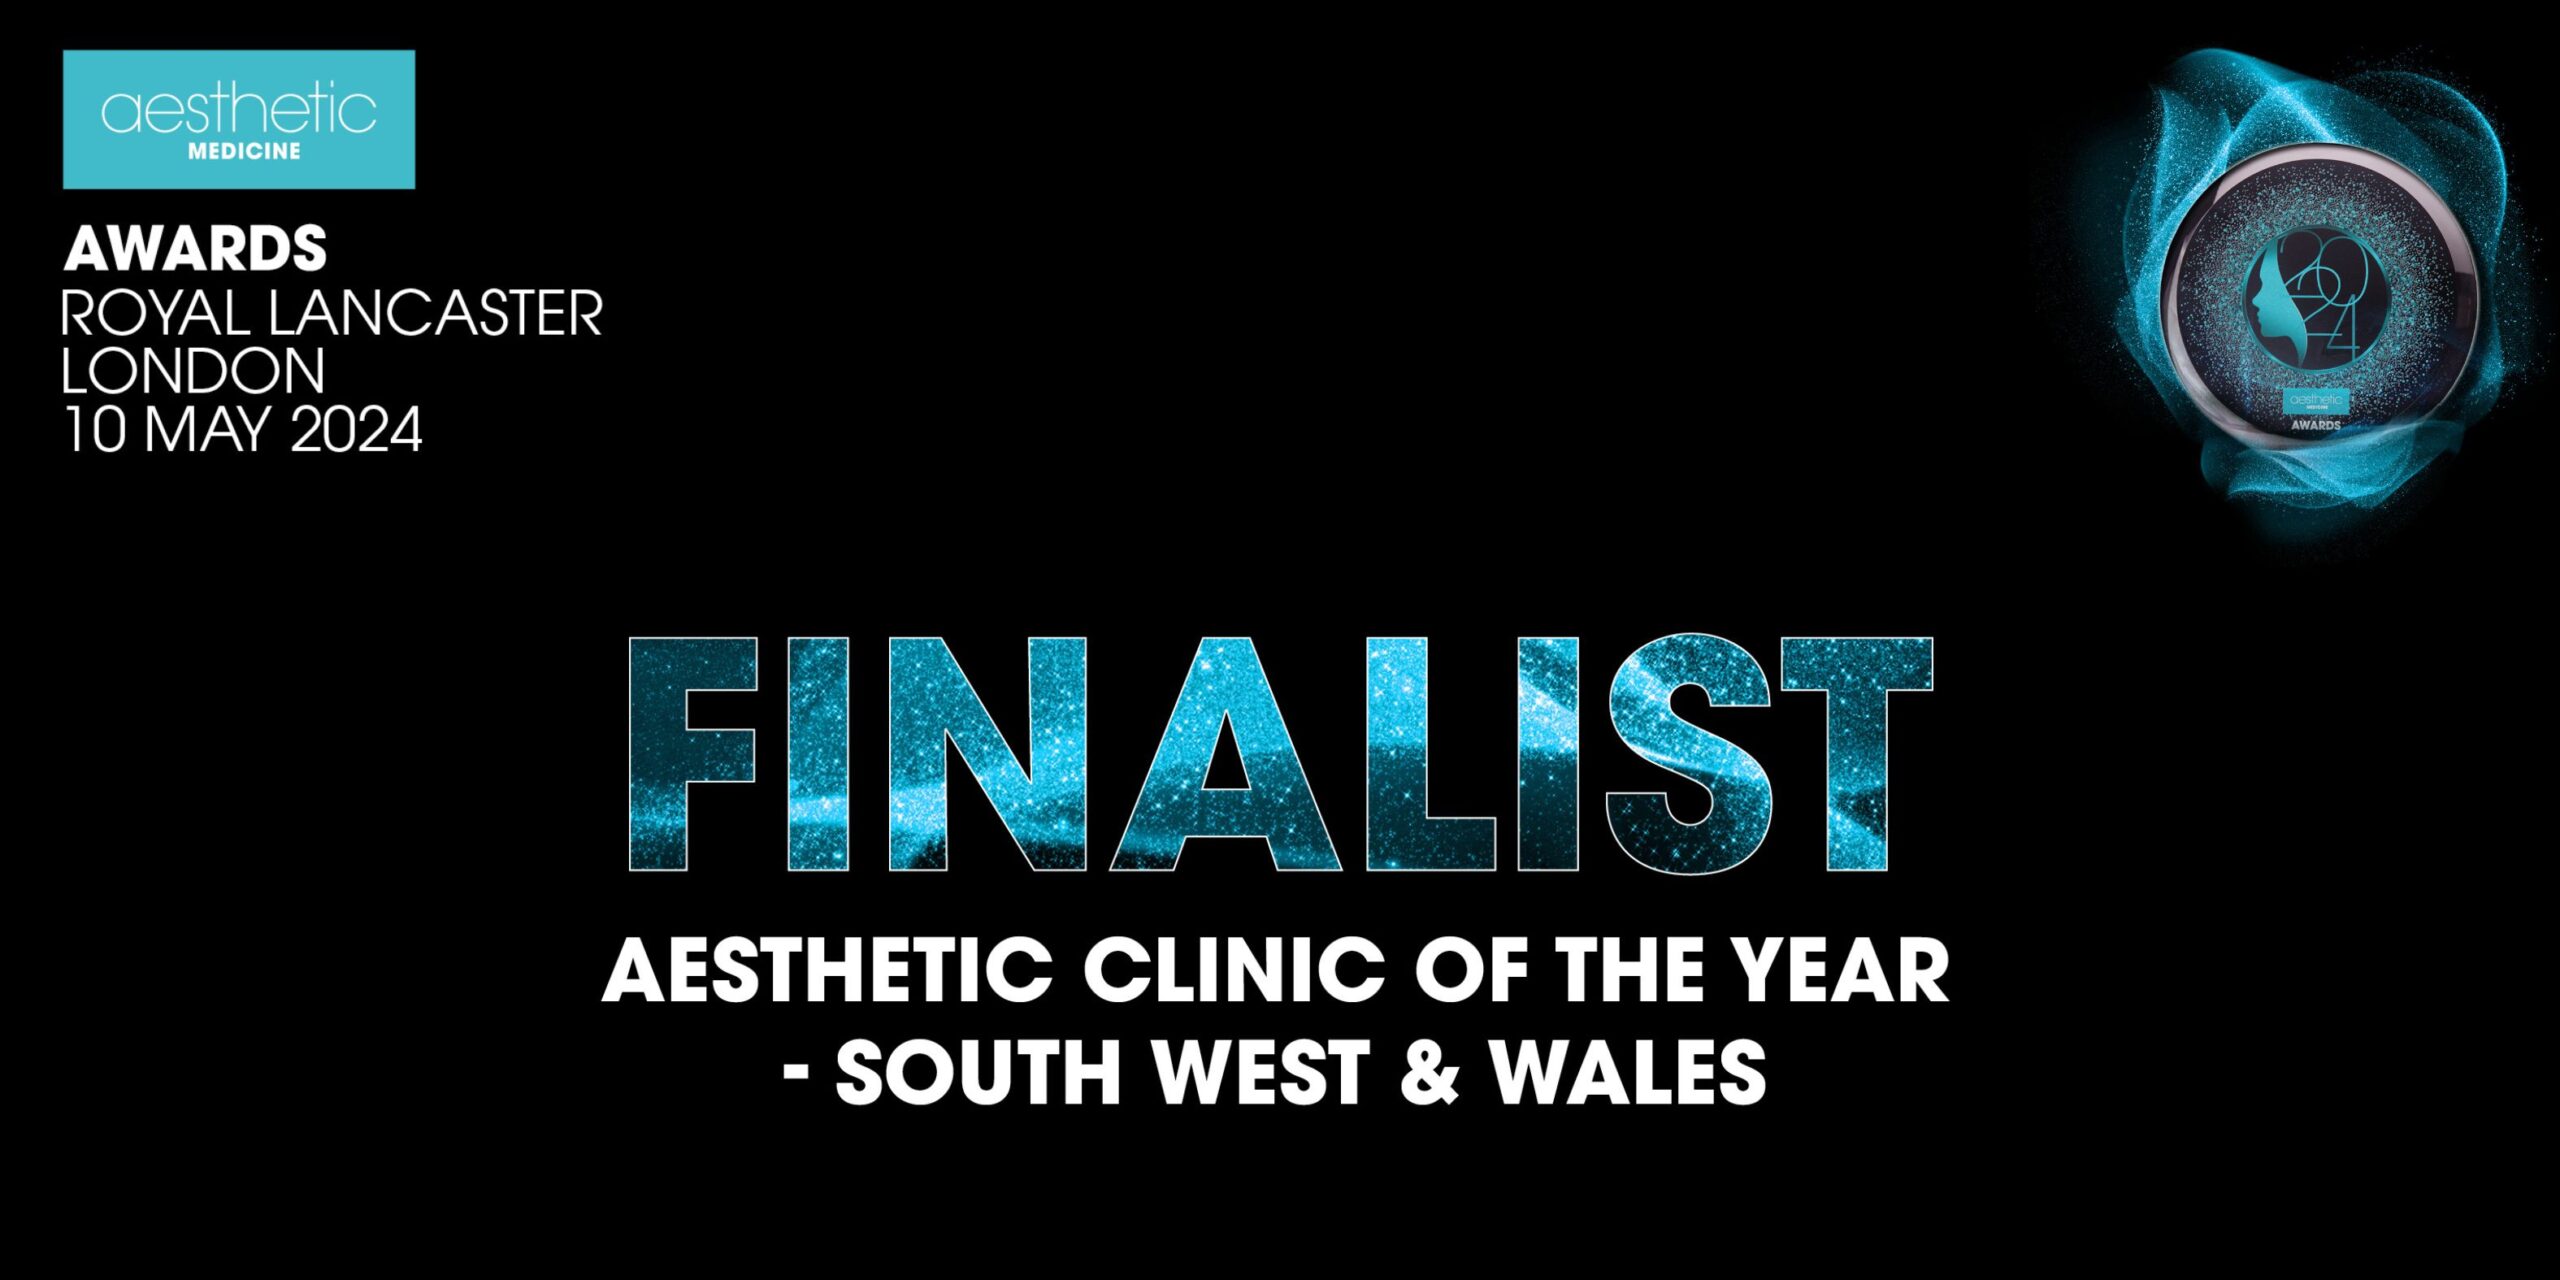 Freyja Medical, dermatology and aesthetic clinic of the year 2020, SME Awards